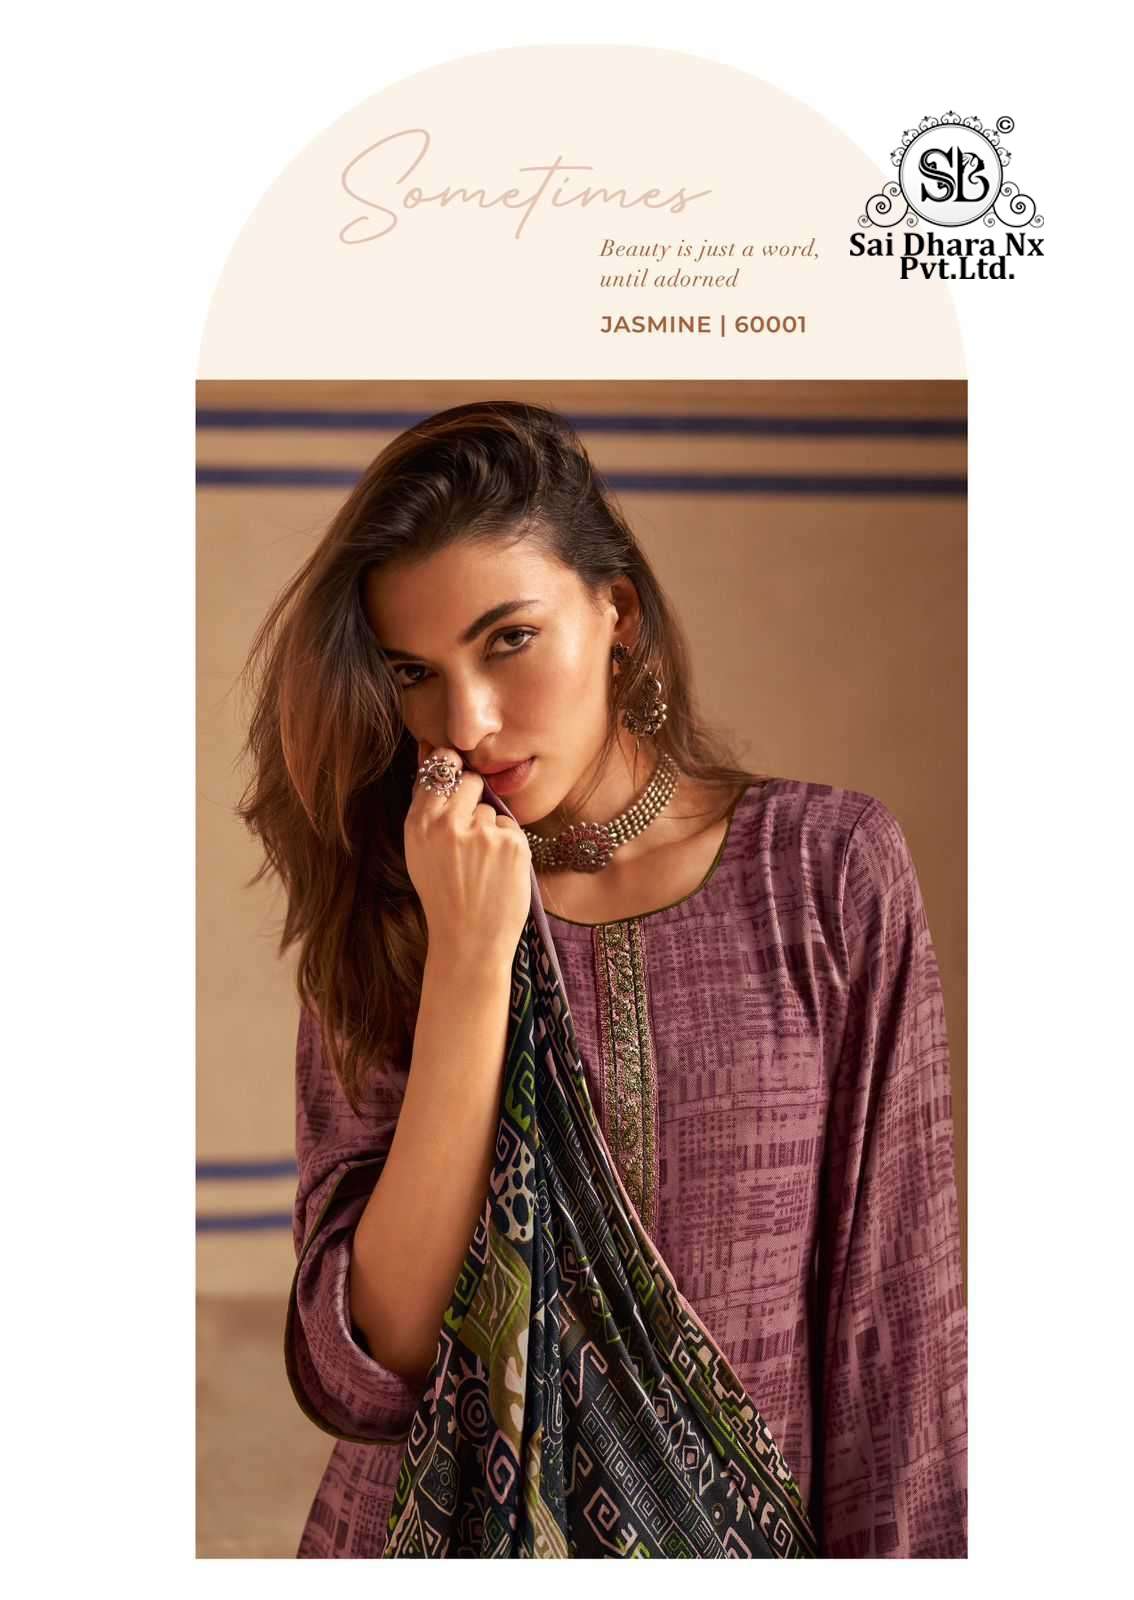 mumtaz arts presents kurti pattern pure pashmina suit wholesale shop in surat - SaiDharaNx